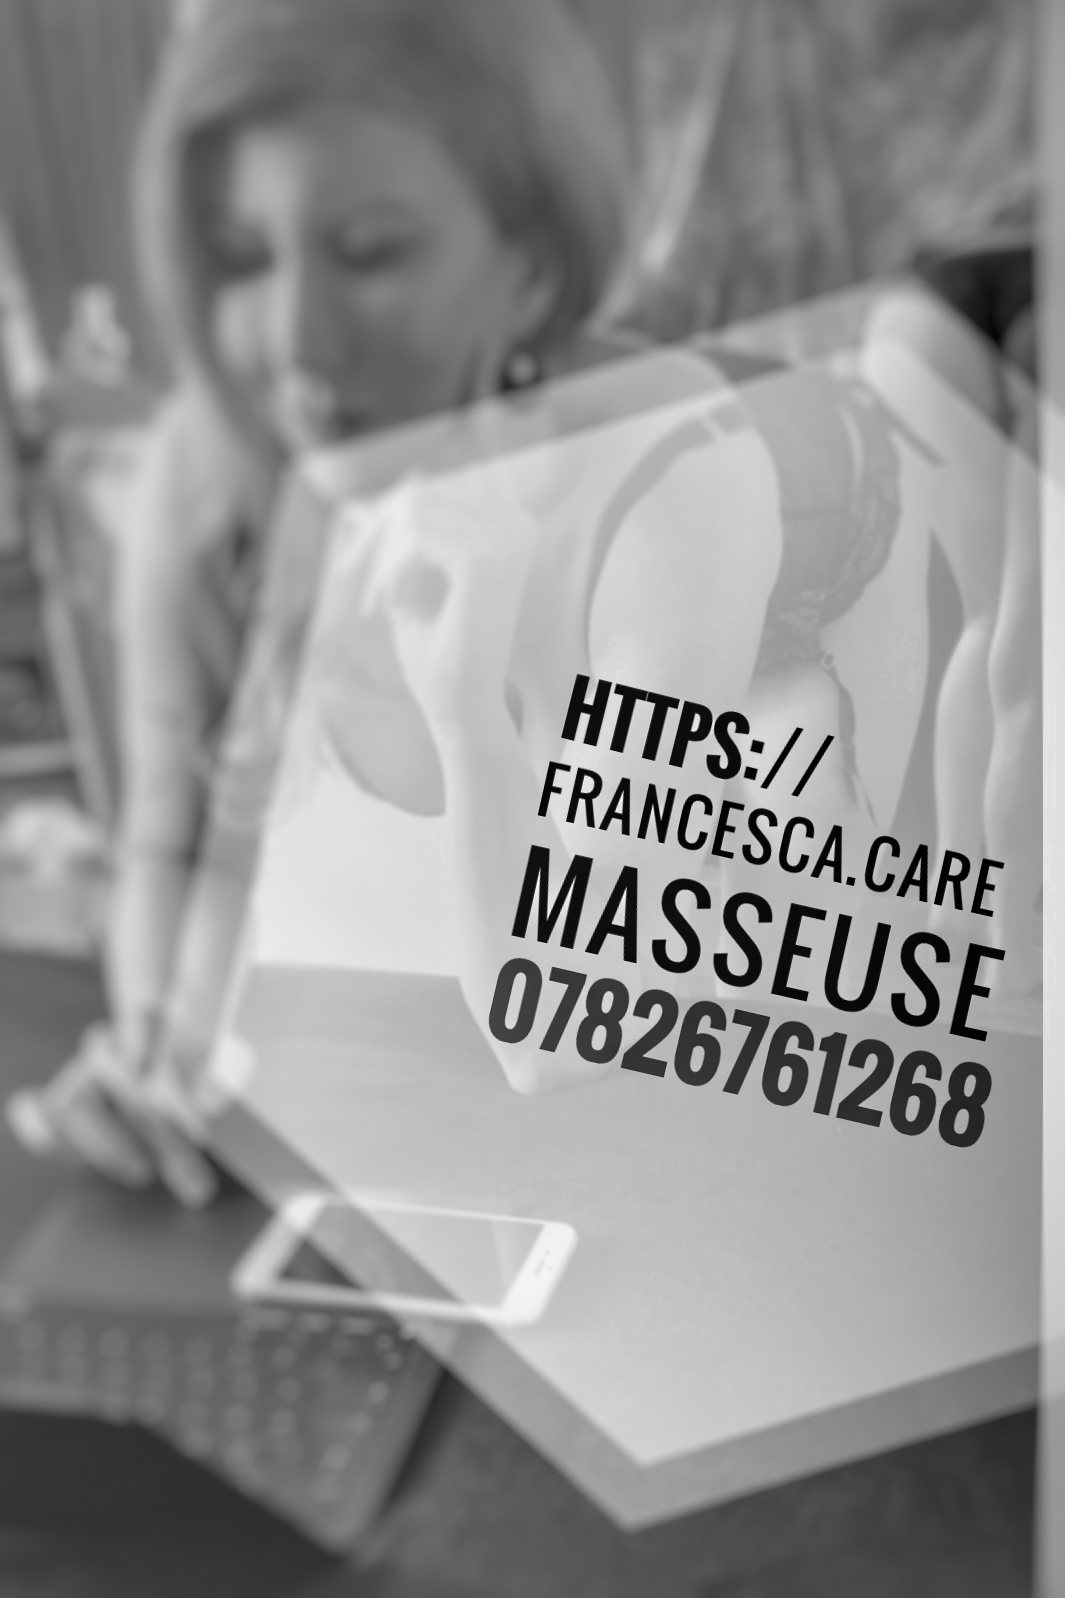 Francesca Care sensual tantric massage in London Gatwick 07826761268